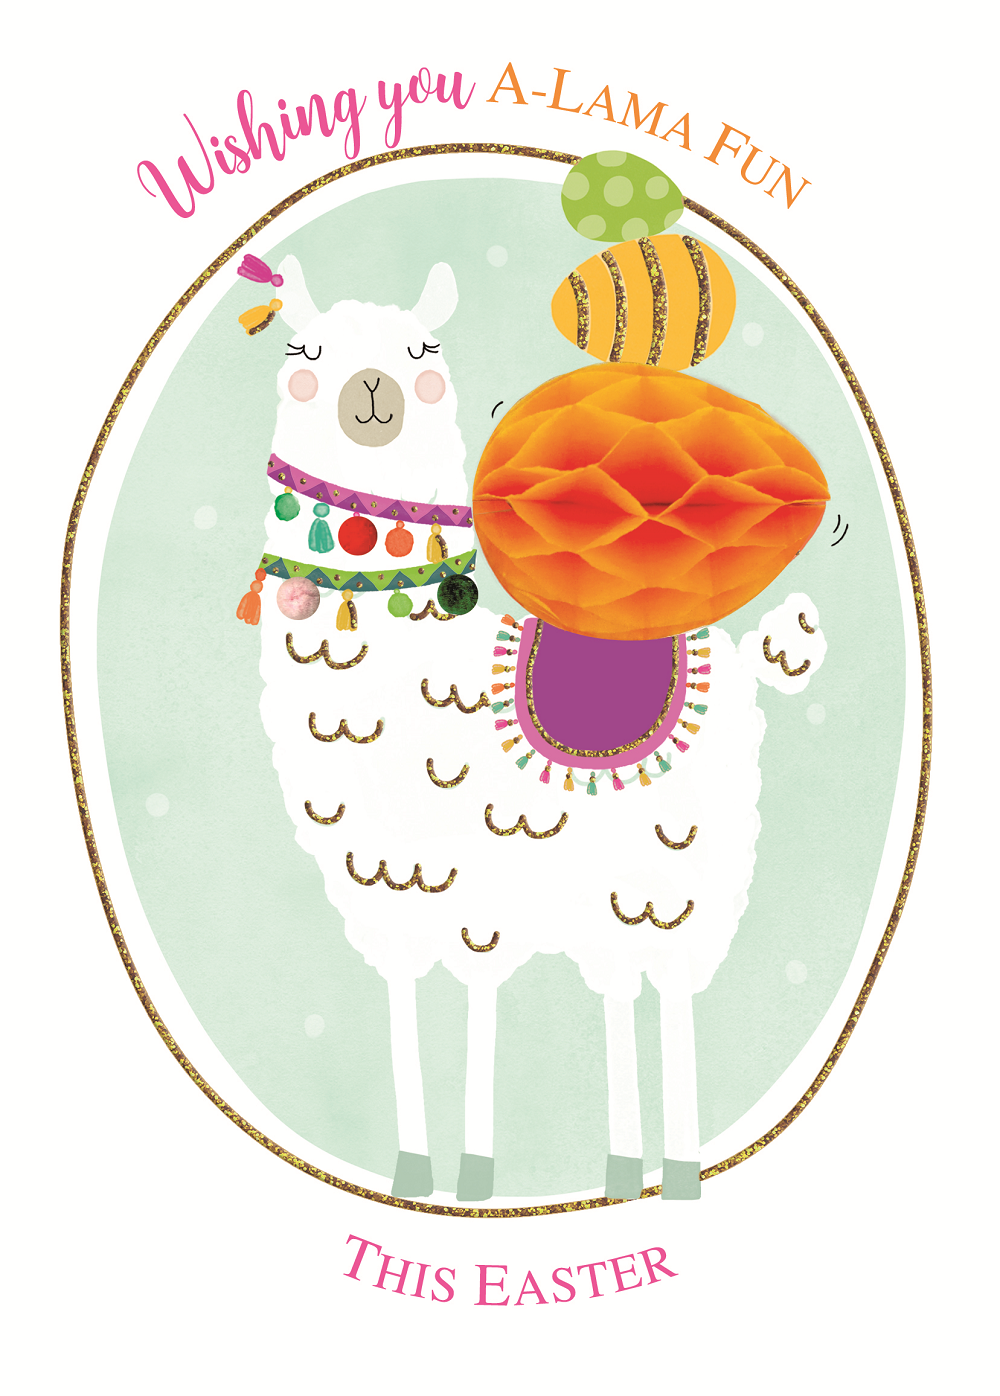 Honeycomb Wishing You A-Lama Fun This Easter Greeting Card